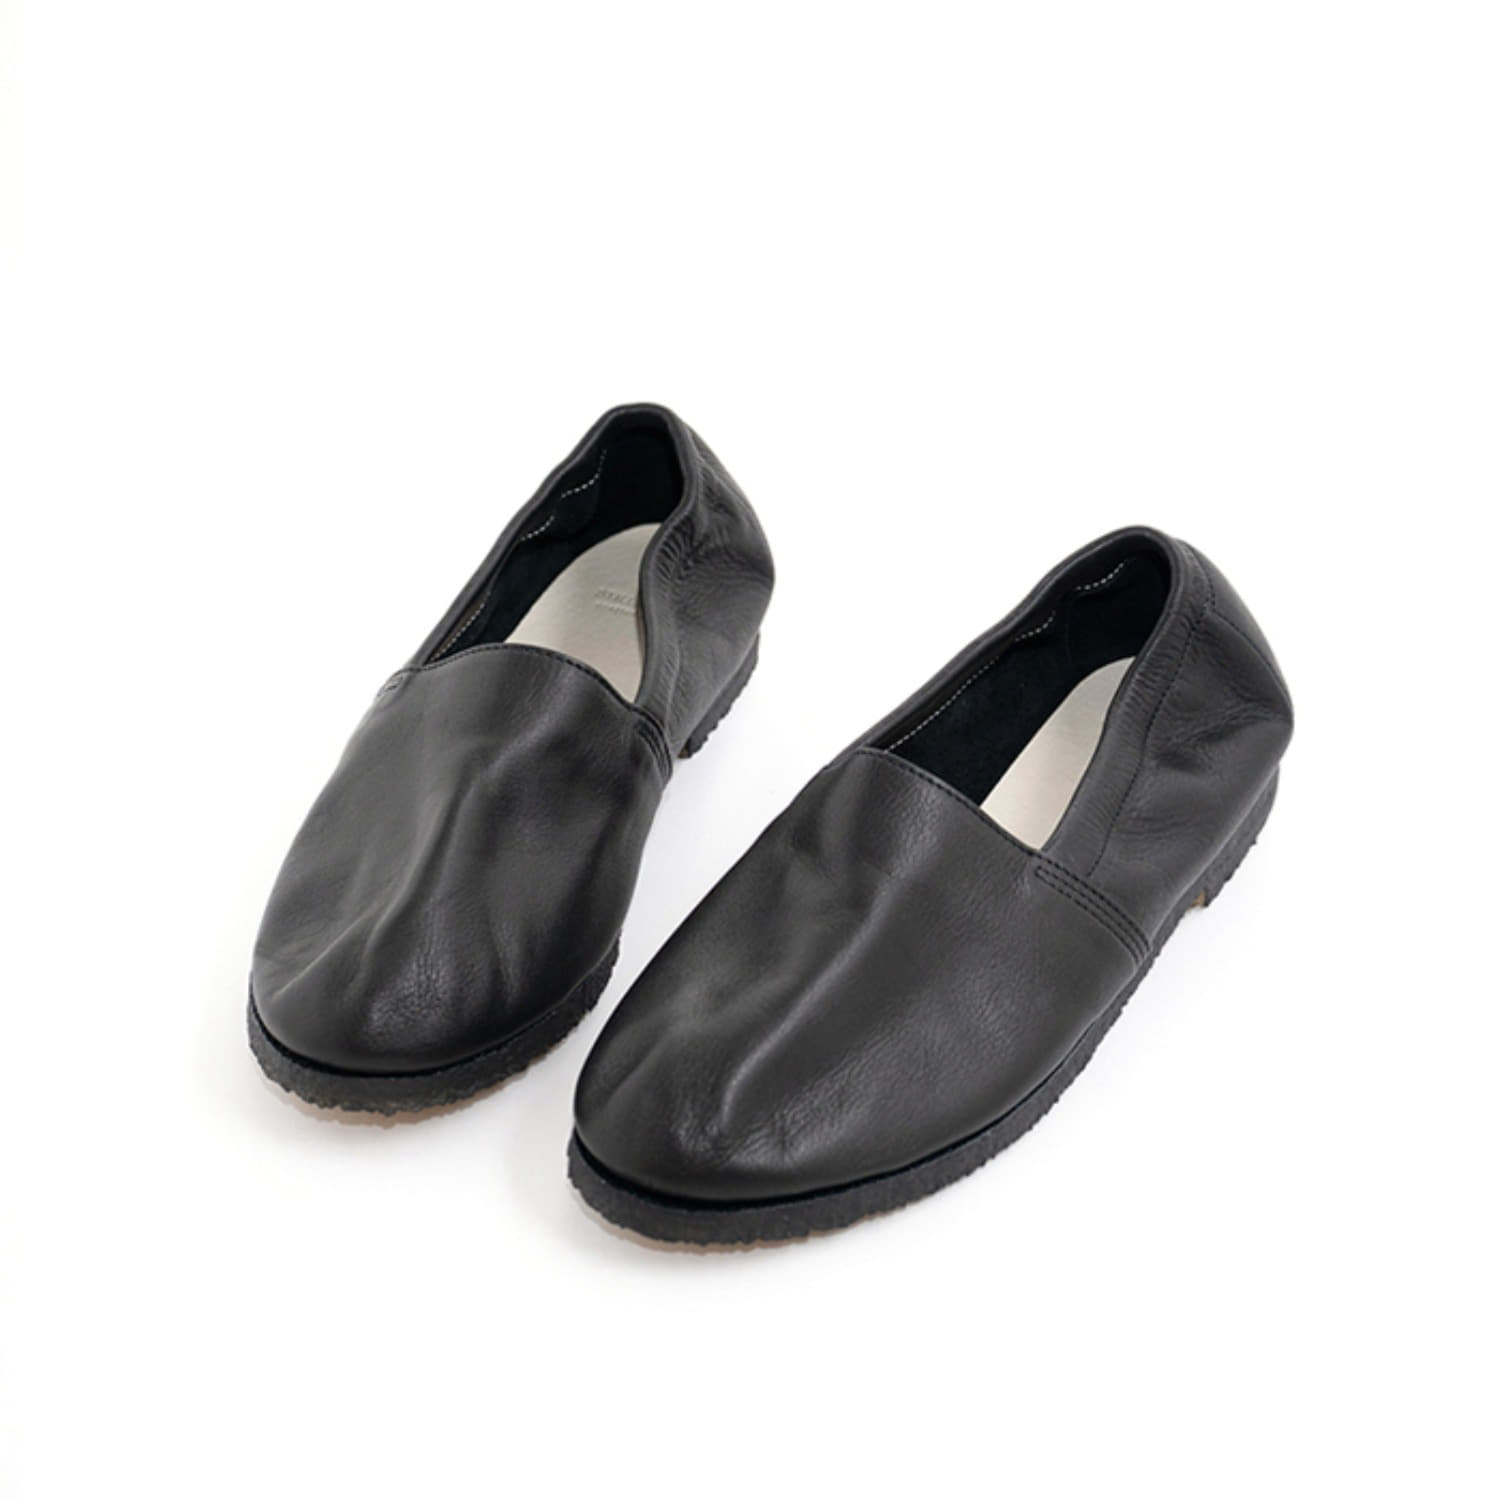 leather slip on shoes black